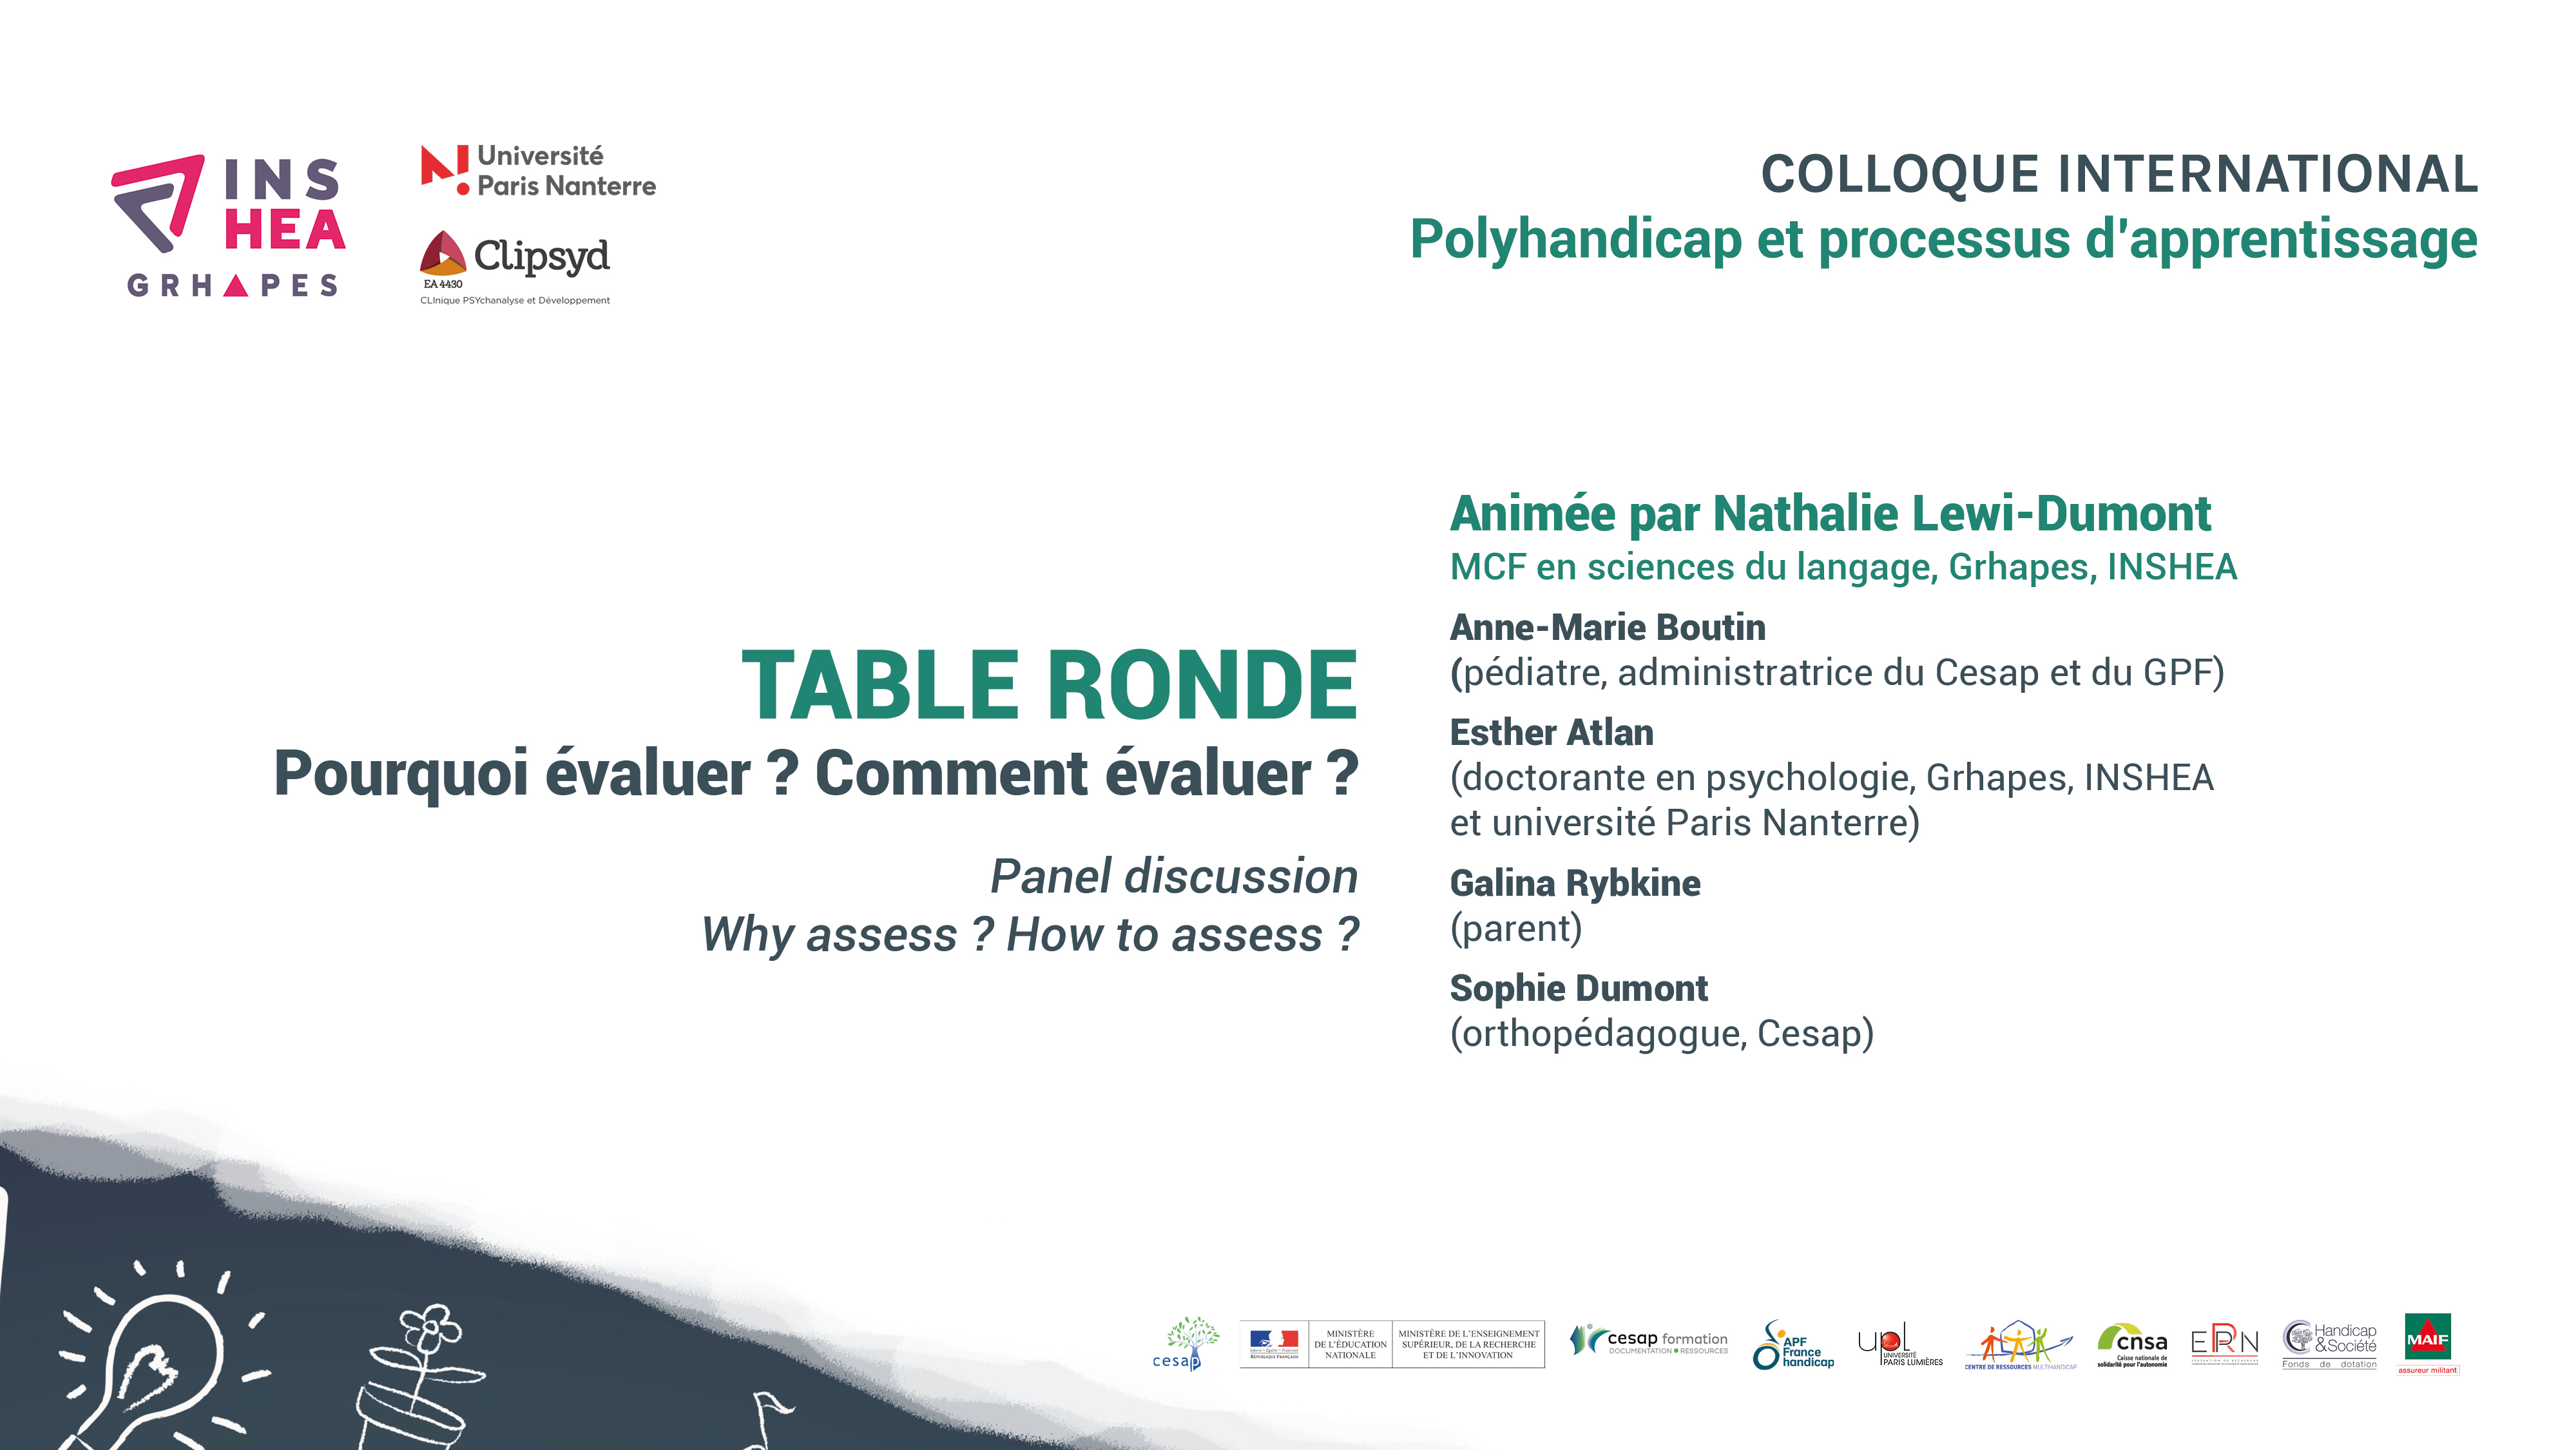 Colloque POLYHANDICAP Table ronde :  Anne-Marie Boutin - Esther Atlan - Galina Rybkine - Sophie Dumont